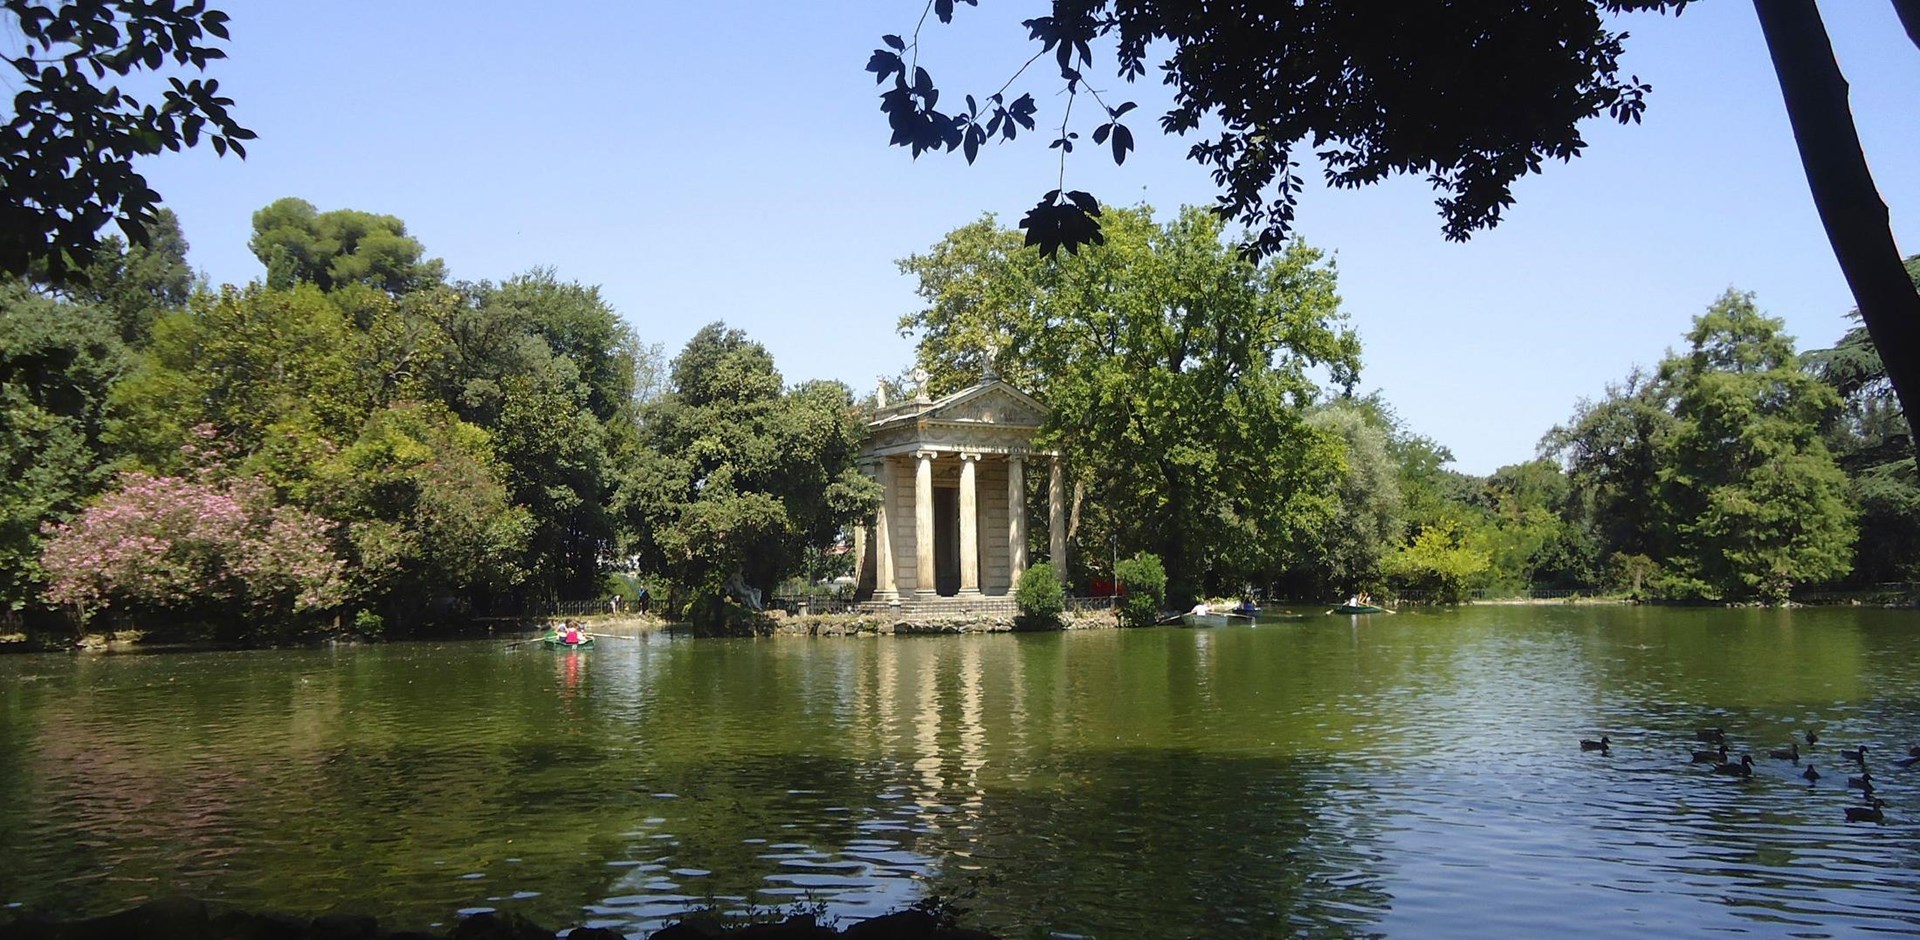 000940 Villa Borghese Gardens_Rome_Italy_Pixabay_italia-173318_no credit required_no model release-Hybris